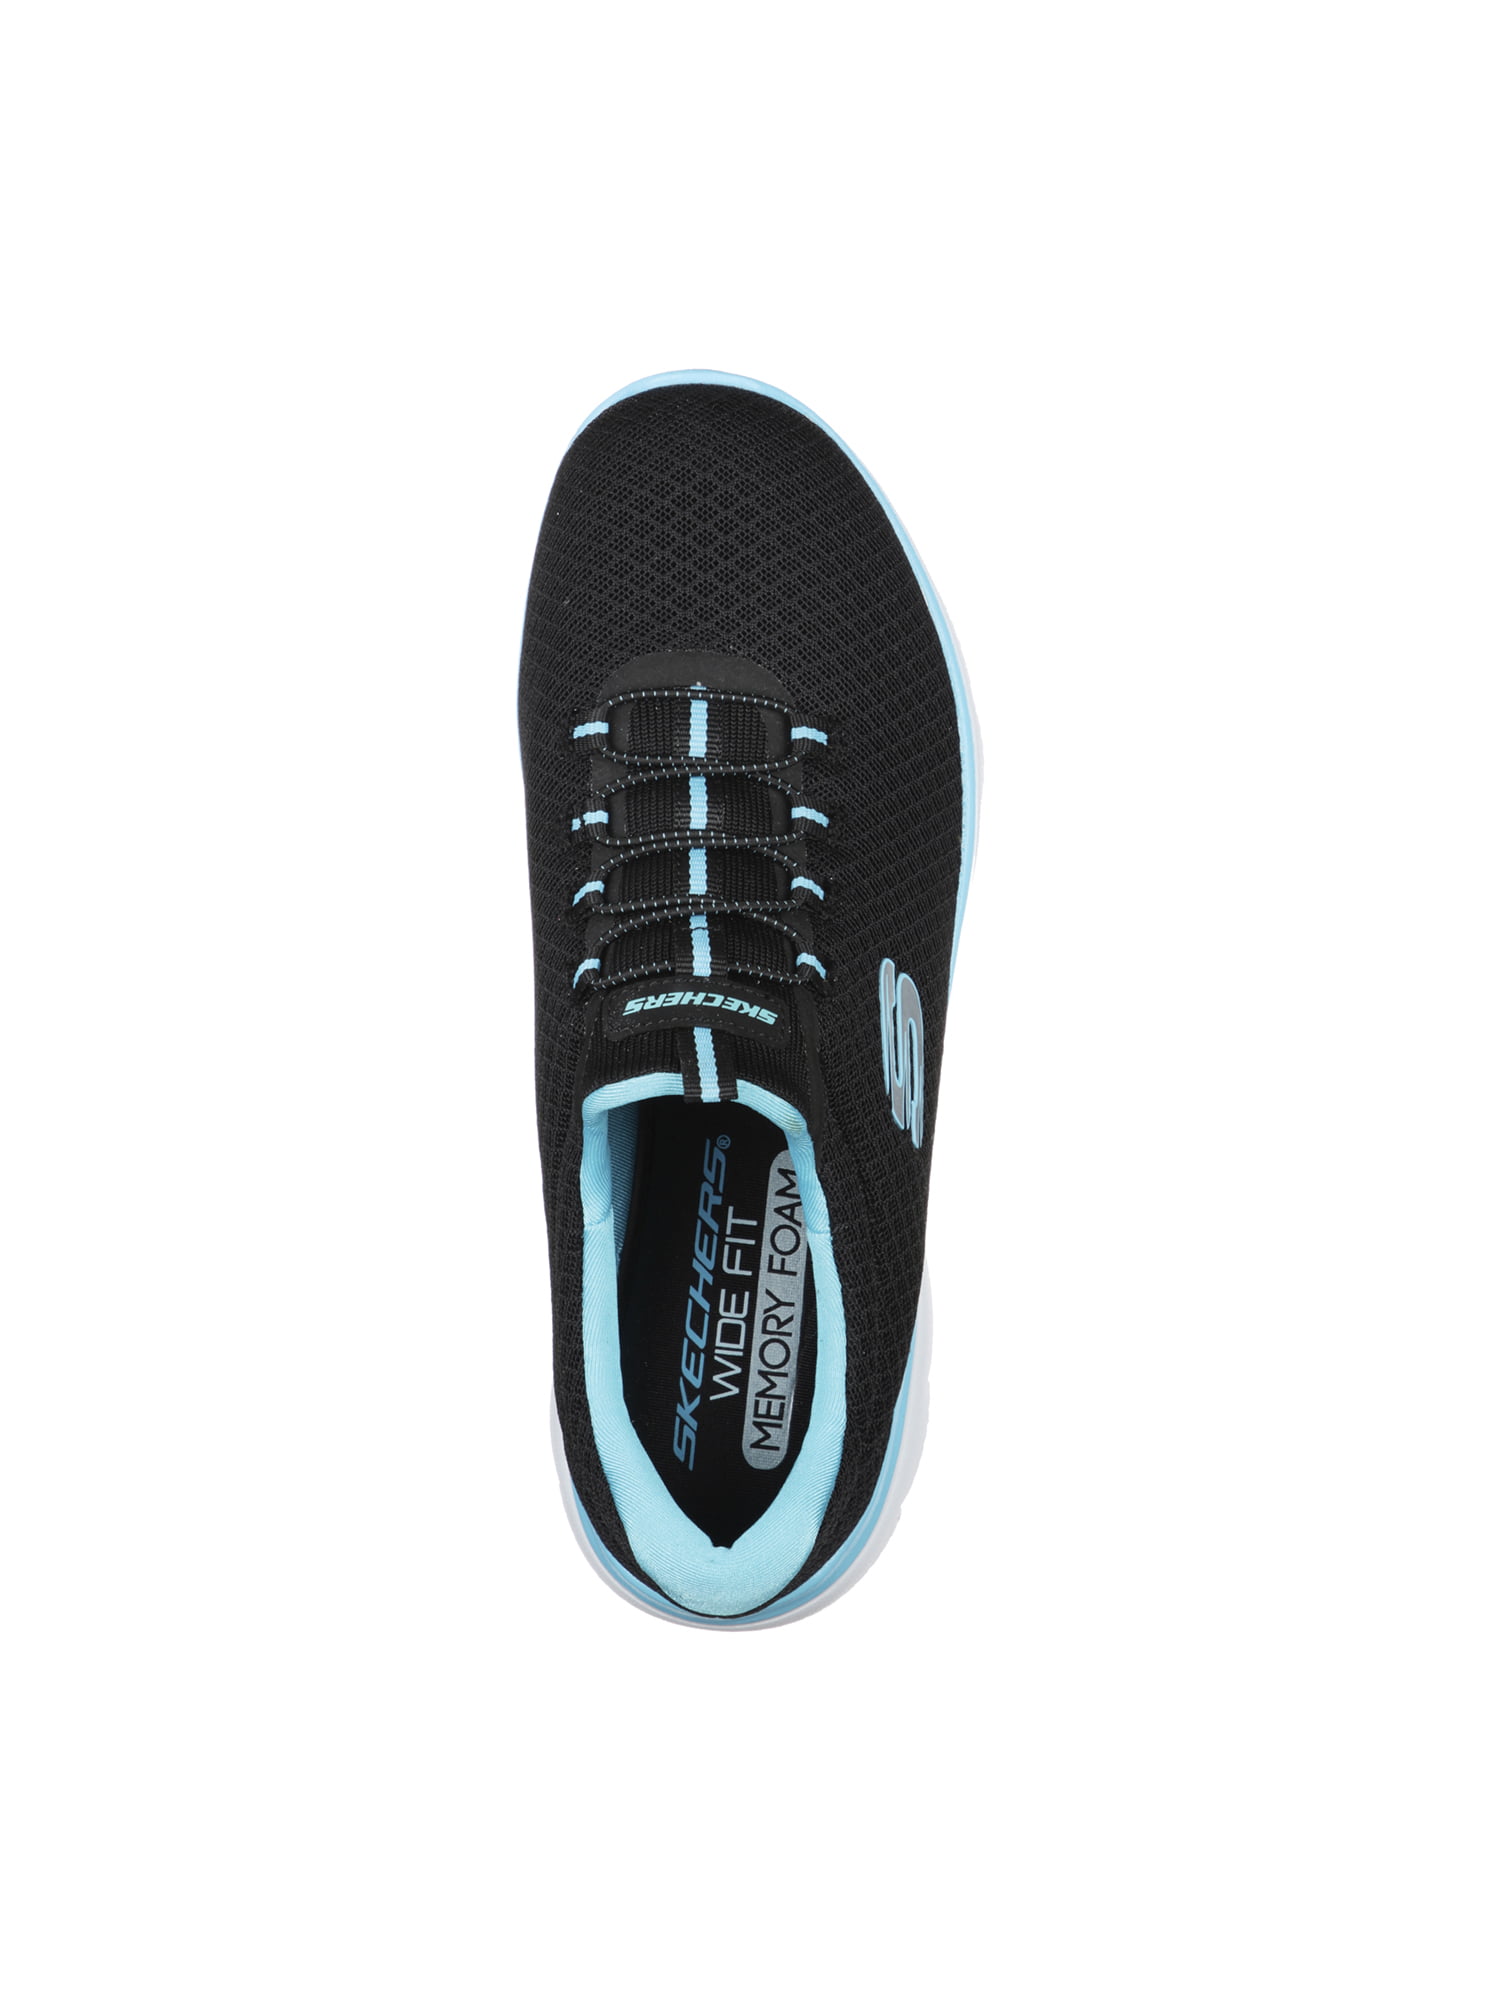 Skechers Women's Sport Summits Mesh Slip-on Athletic Sneaker (Wide Available) -